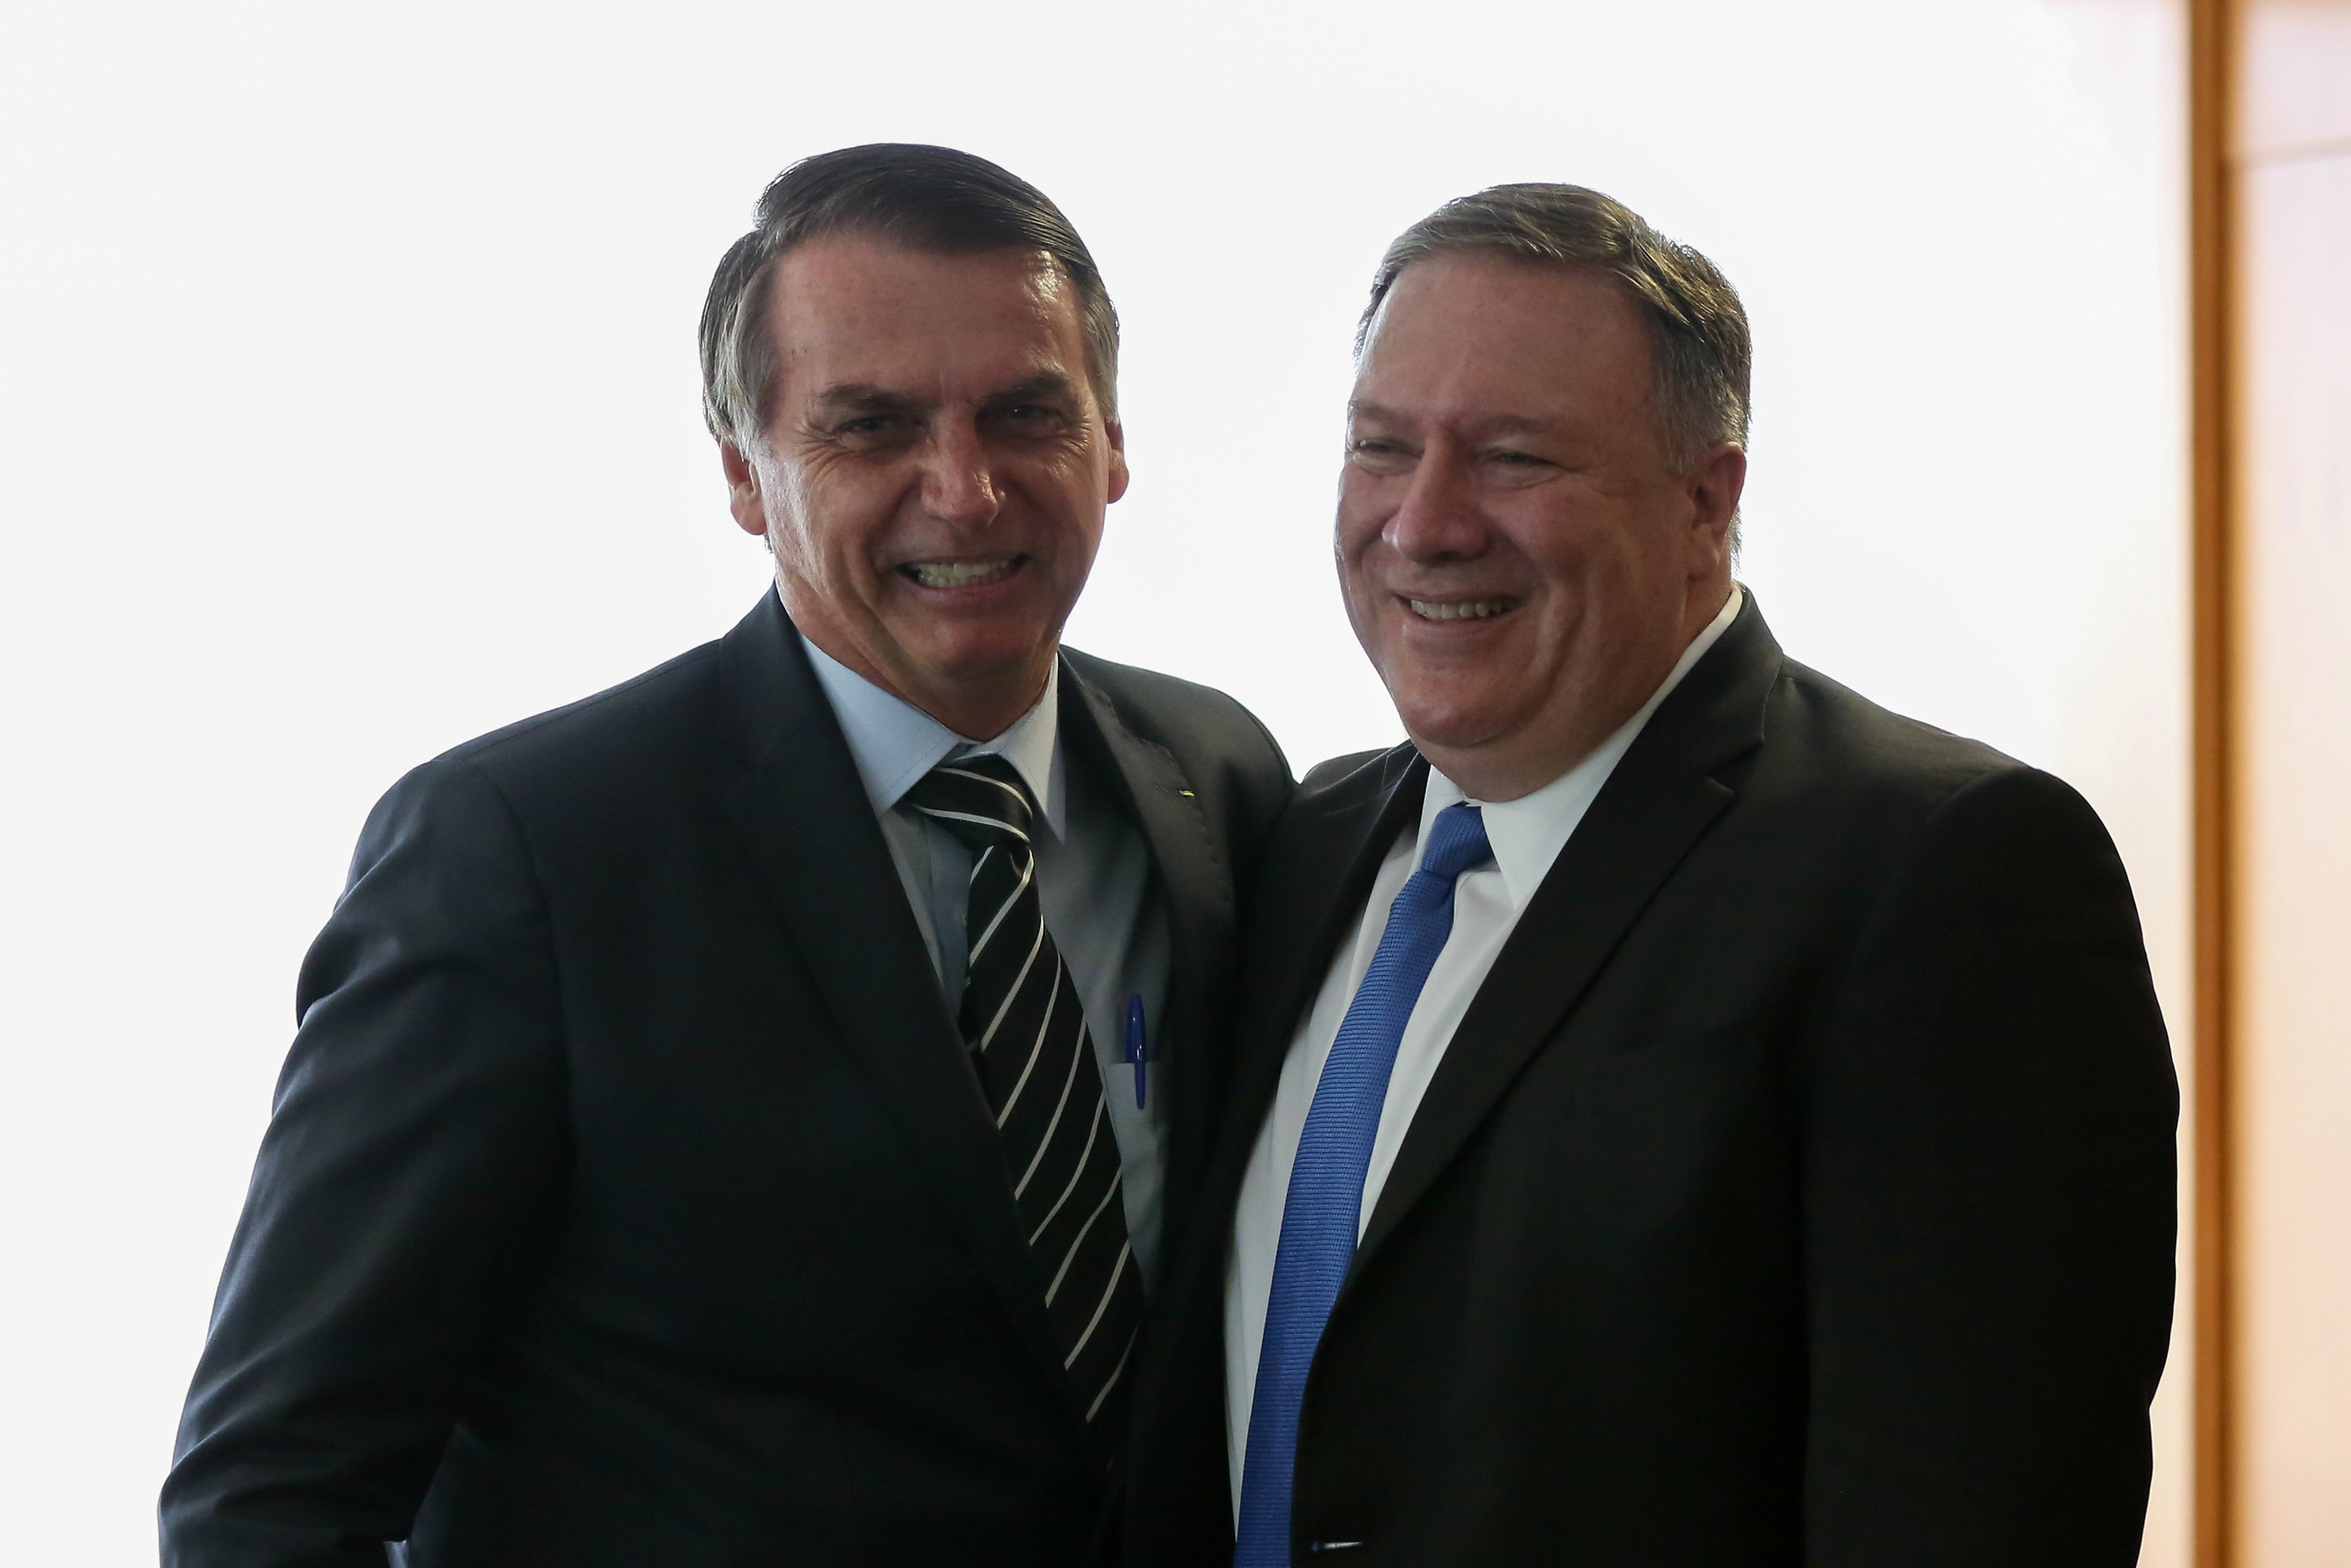 U.S. Secretary of State Pompeo attends meeting with Brazil's President Bolsonaro in Brasilia.